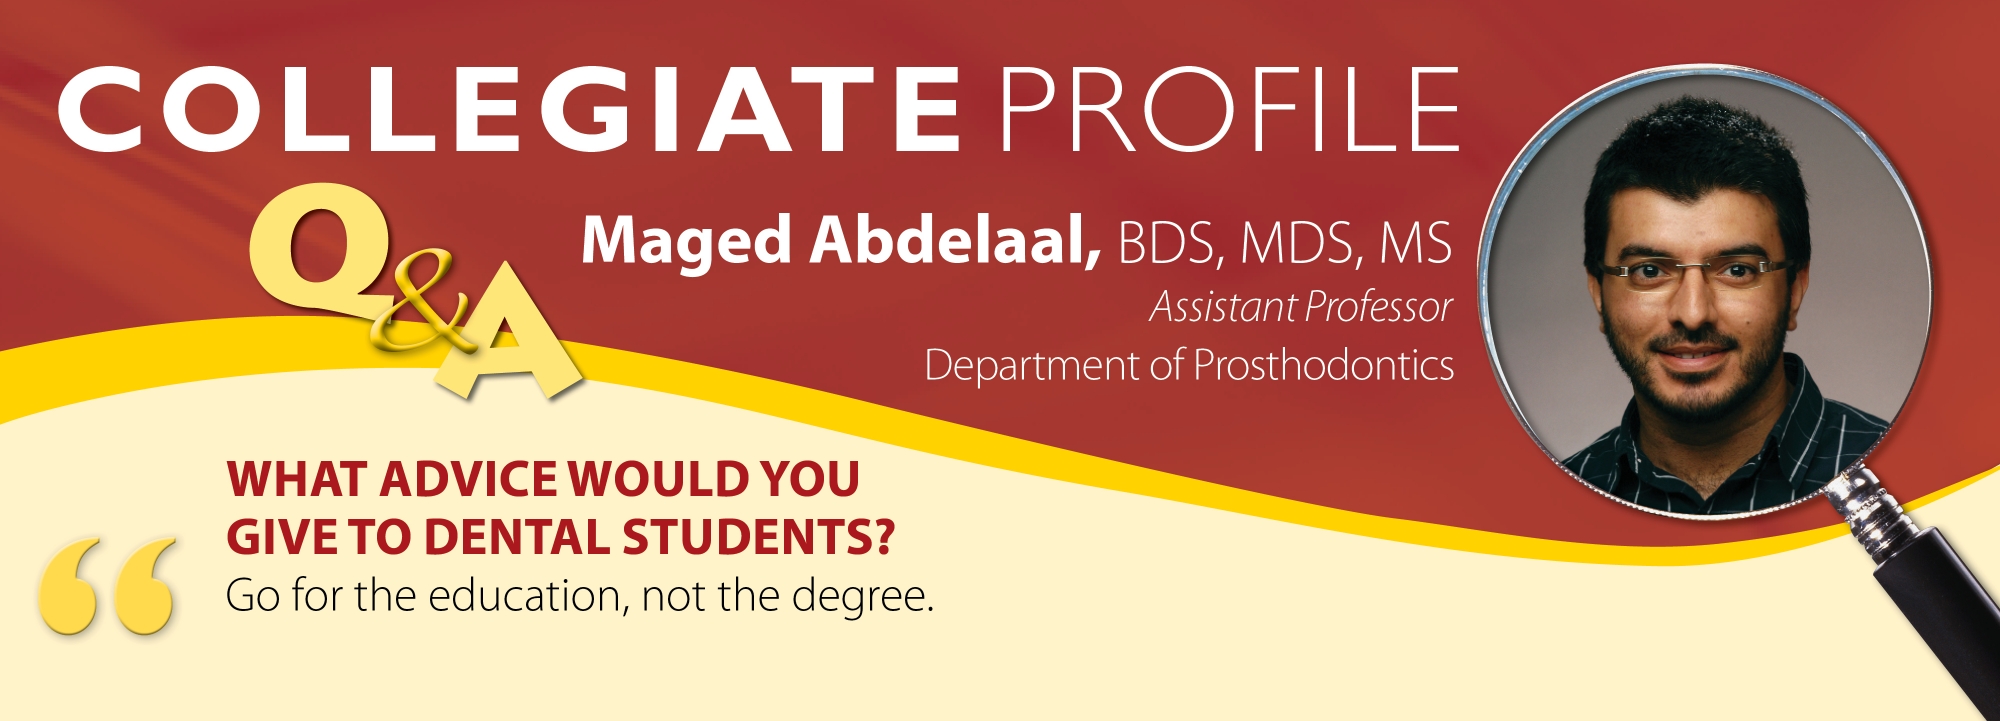 january_2017_abdelaal_collegiate_profile